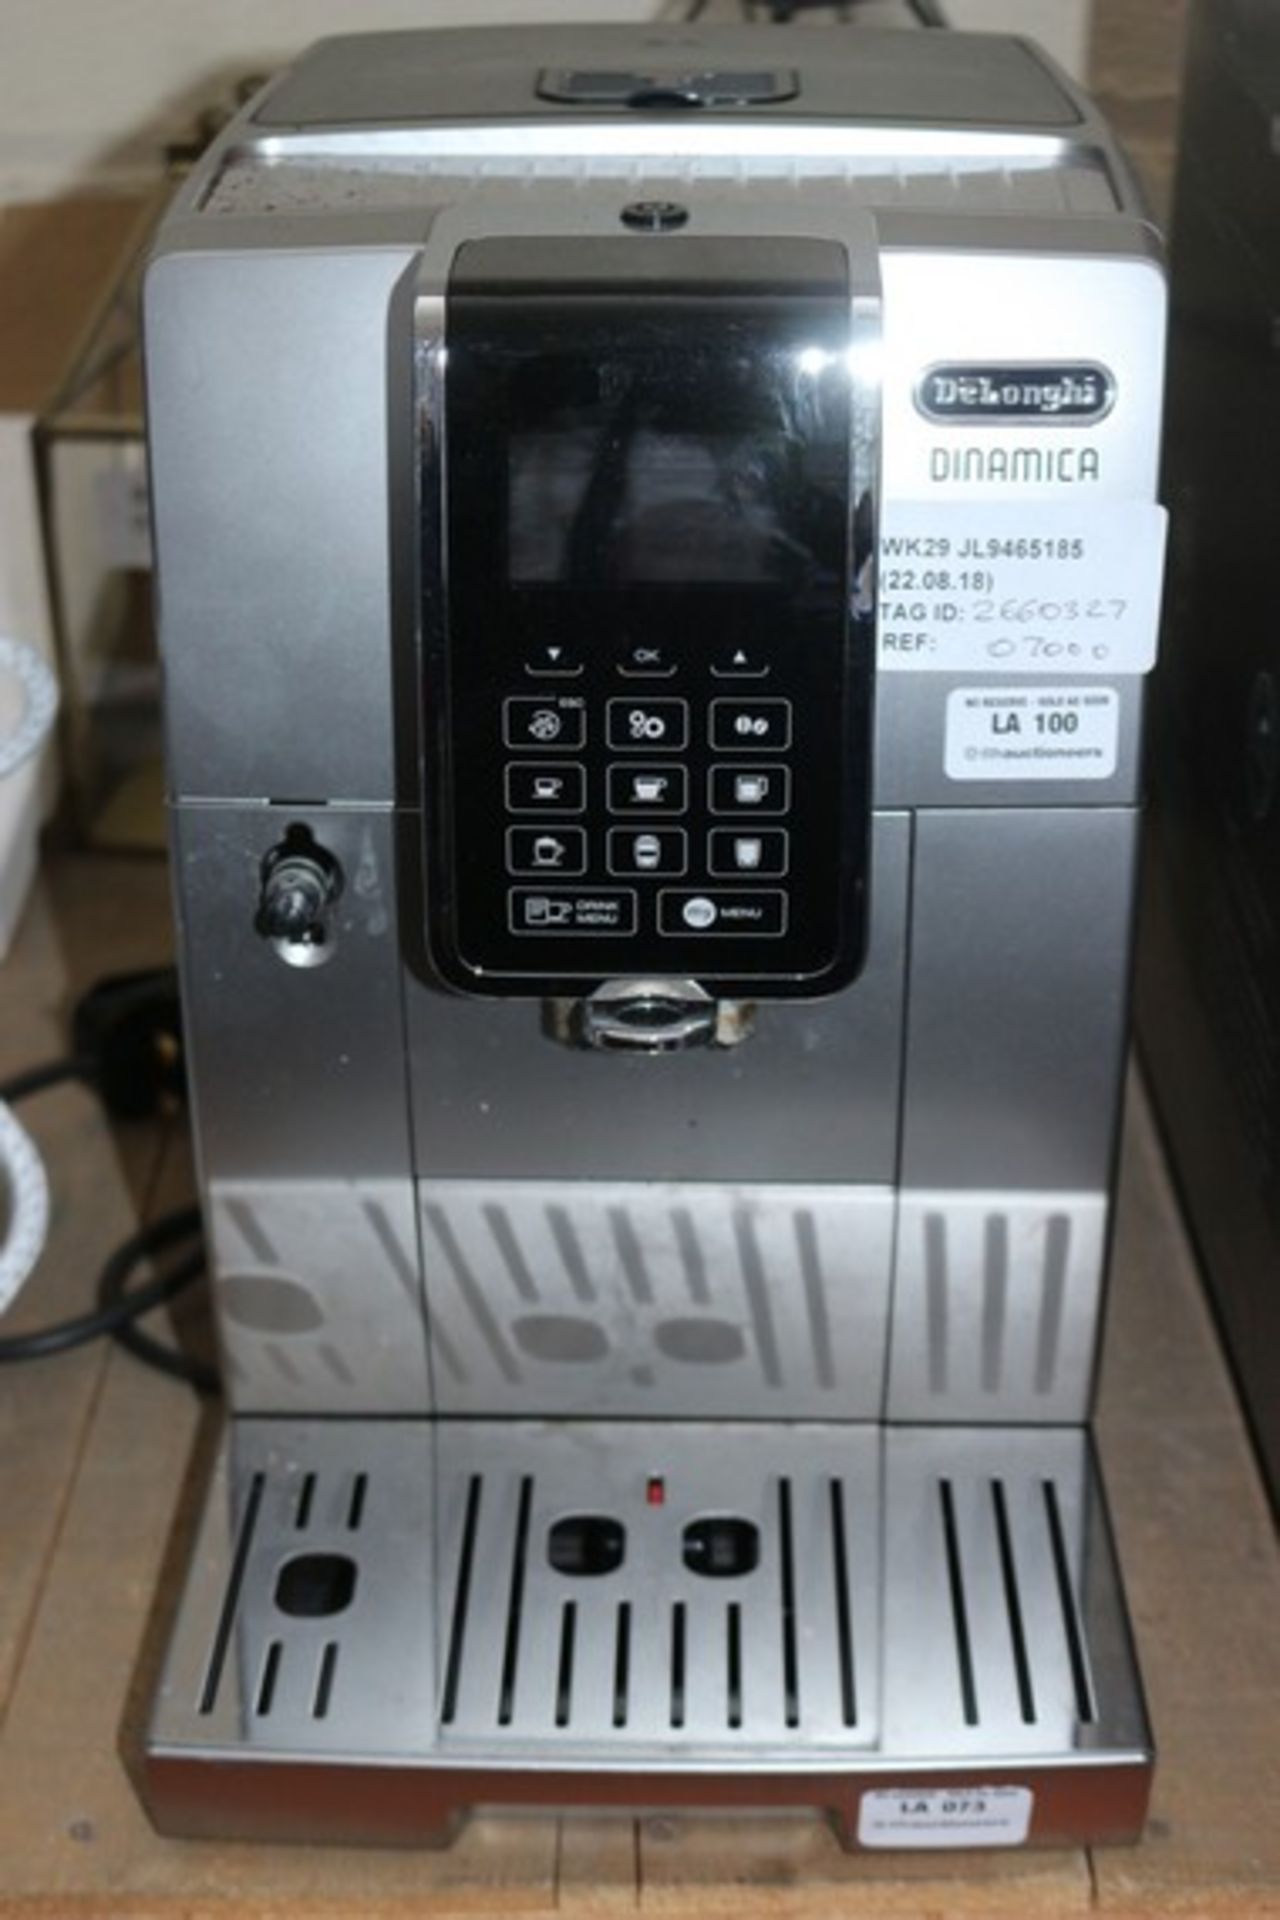 1 x JOHN LEWIS DINAMICA COFFEE MACHINE RRP £700 (22.08.18) (2660327) *PLEASE NOTE THAT THE BID PRICE